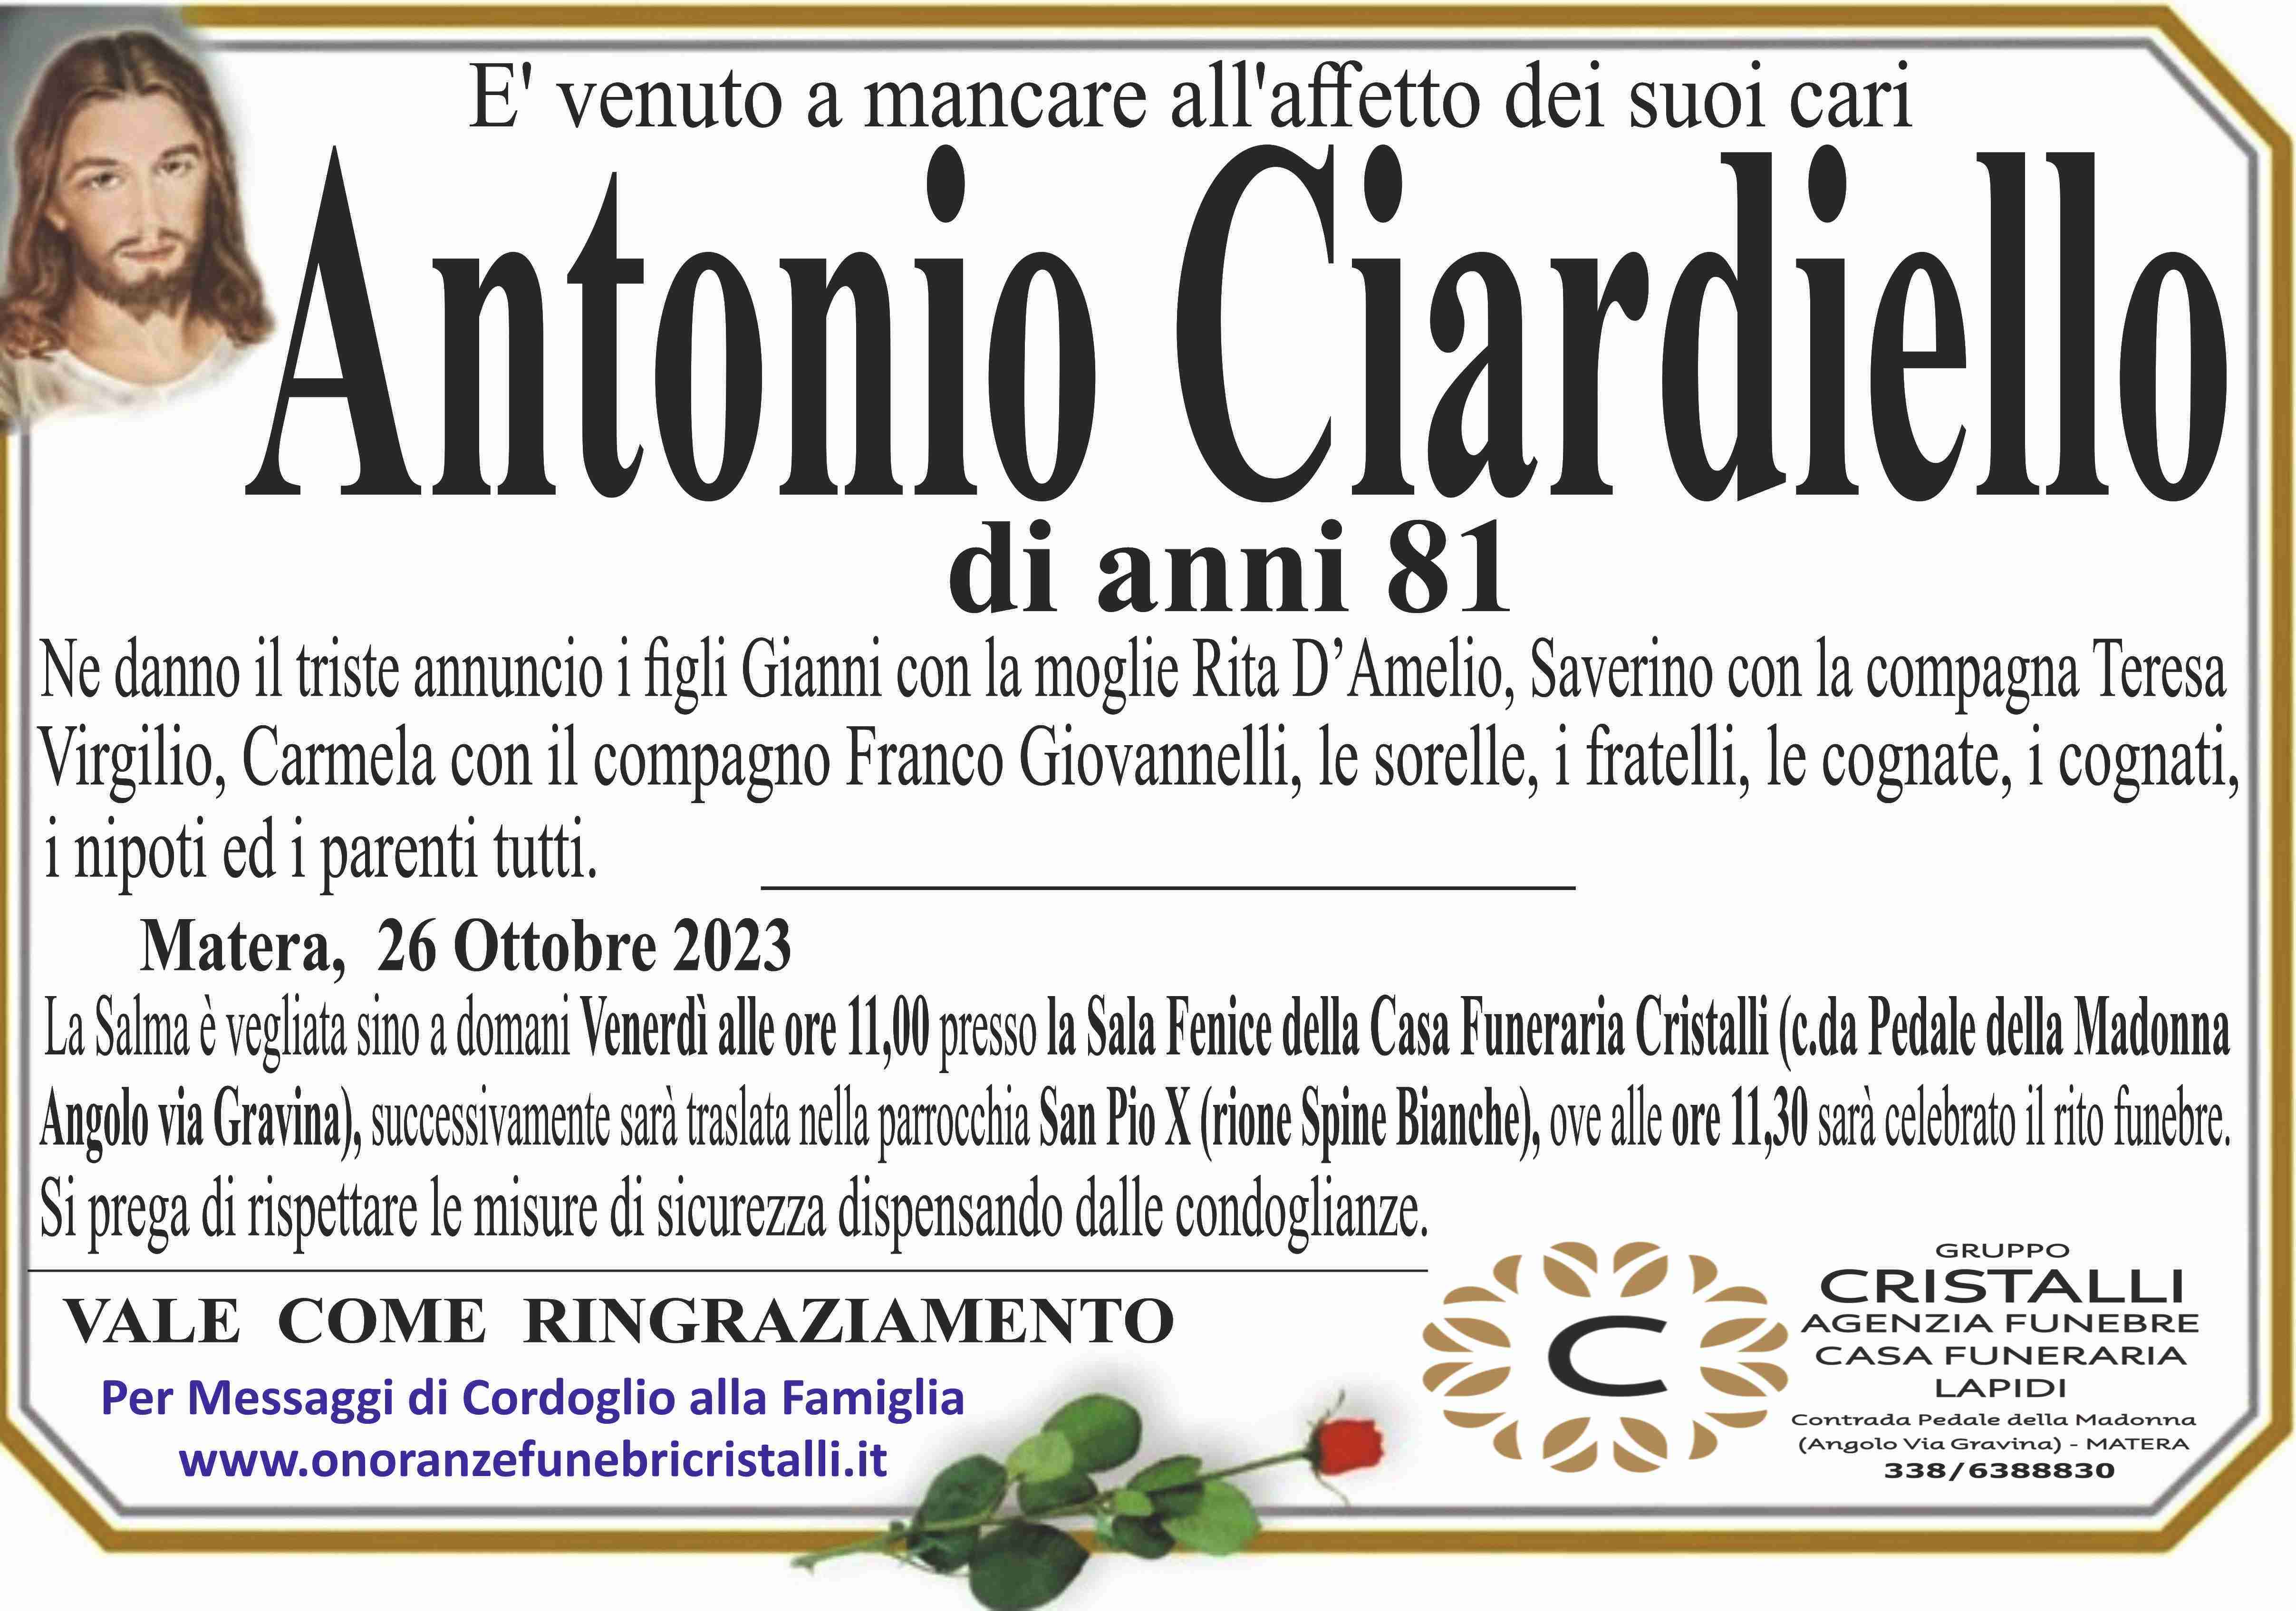 Antonio Ciardiello